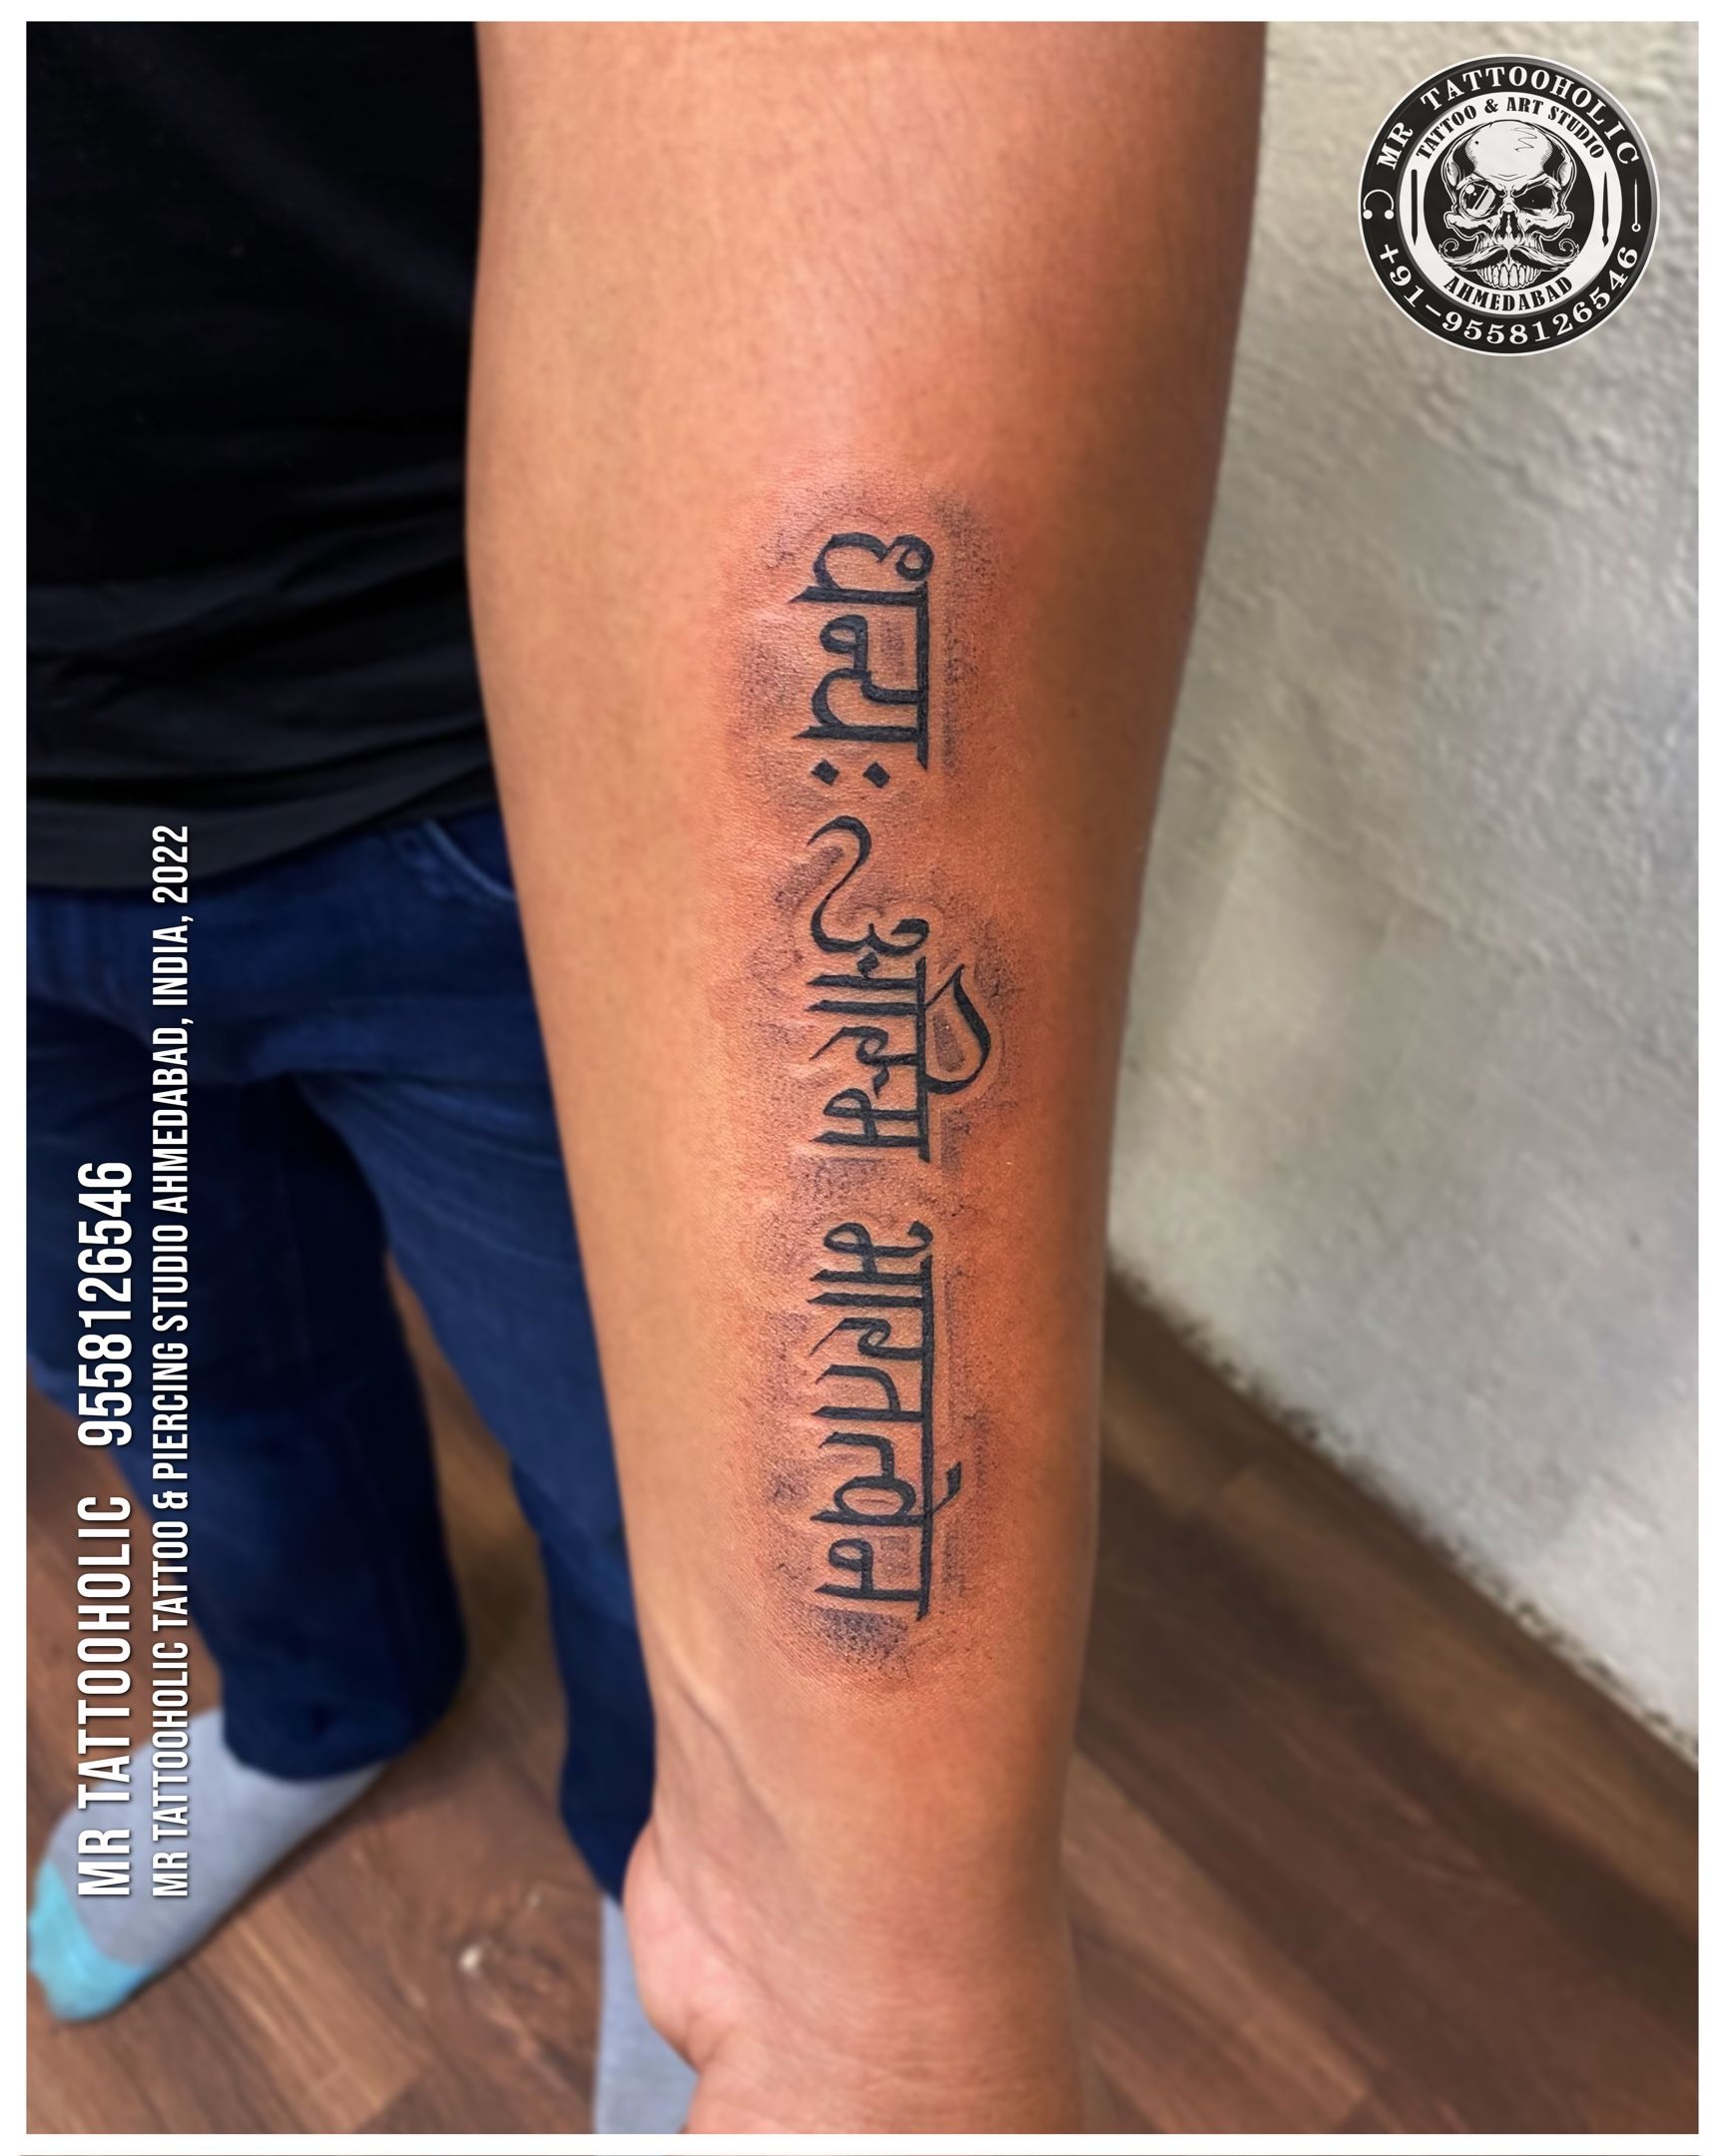 Radiant Tattoos   मत पत दव भव  Let you be one who worships mother  and father as God Artist  Viraj Khanolkar Indiantattooartist  instatattoo tattoocultr blackngrey blackandgreytattoo inked  tattoooftheday tattoo 